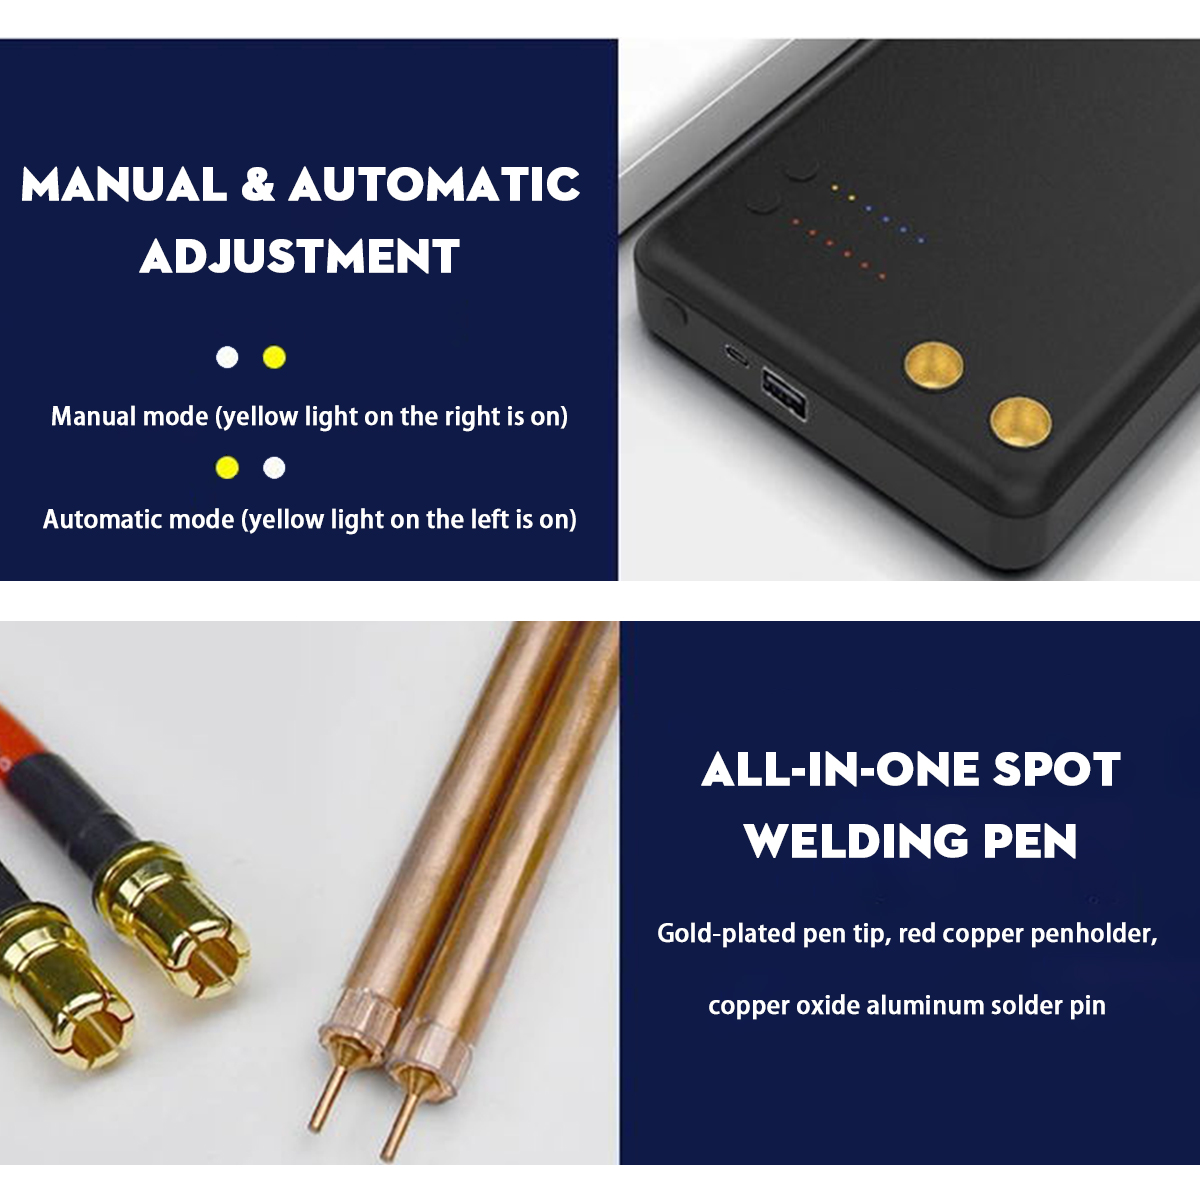 5000mAh-Portable-Handheld-Spot-Welder-18650-Lithium-Battery-Nickel-Piece-DIY-Complete-Set-of-Mini-St-1871631-7